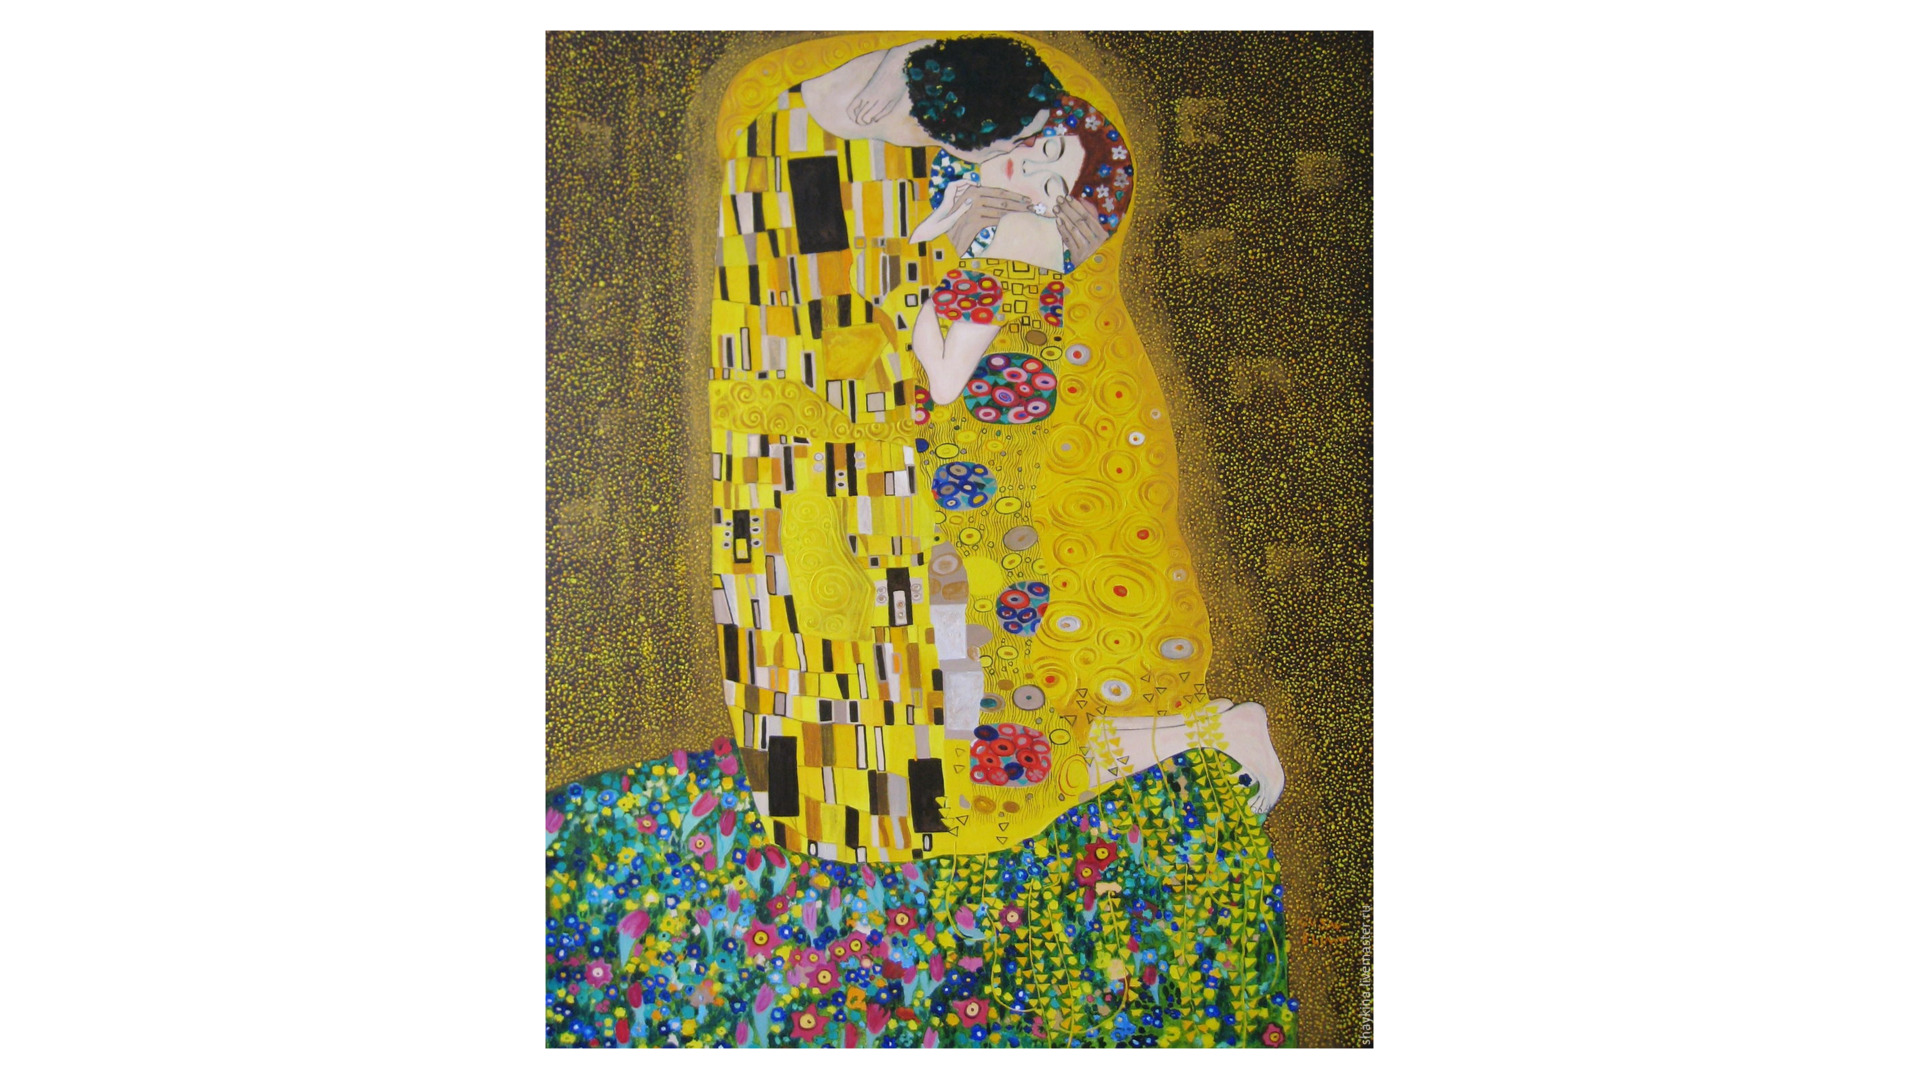 Картина 28х34см "Поцелуй" Климт